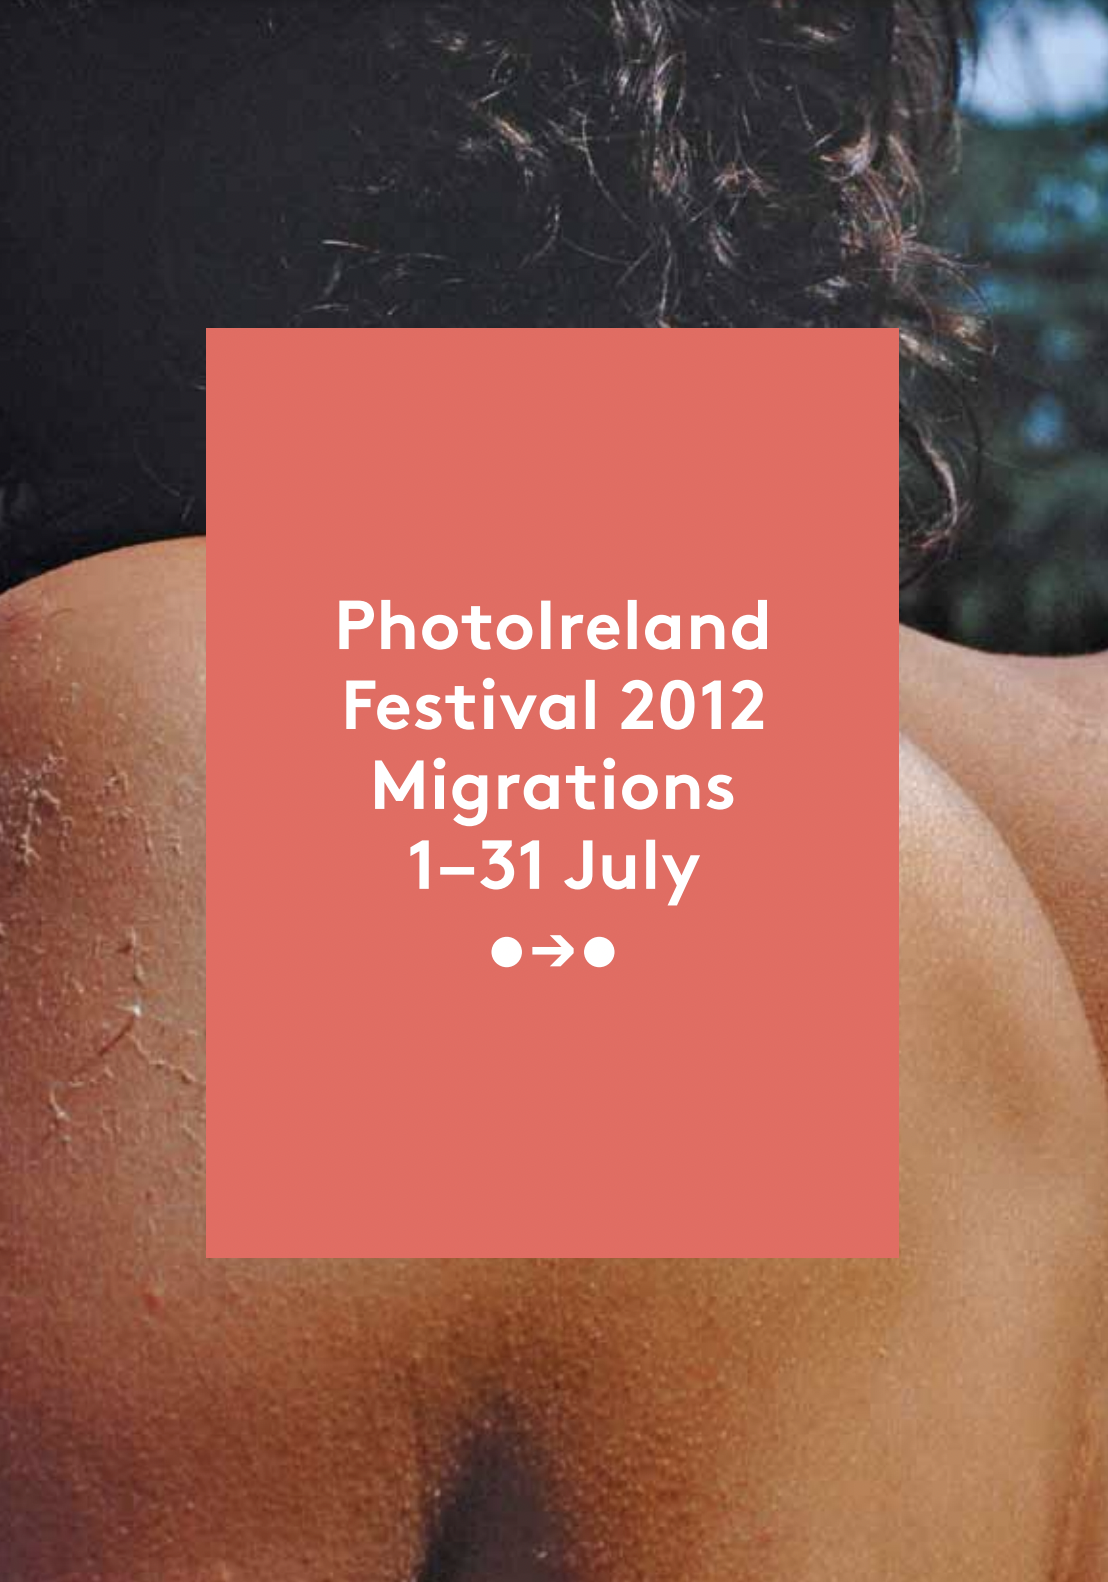 PhotoIreland Festival 2012: Migrations PhotoIreland